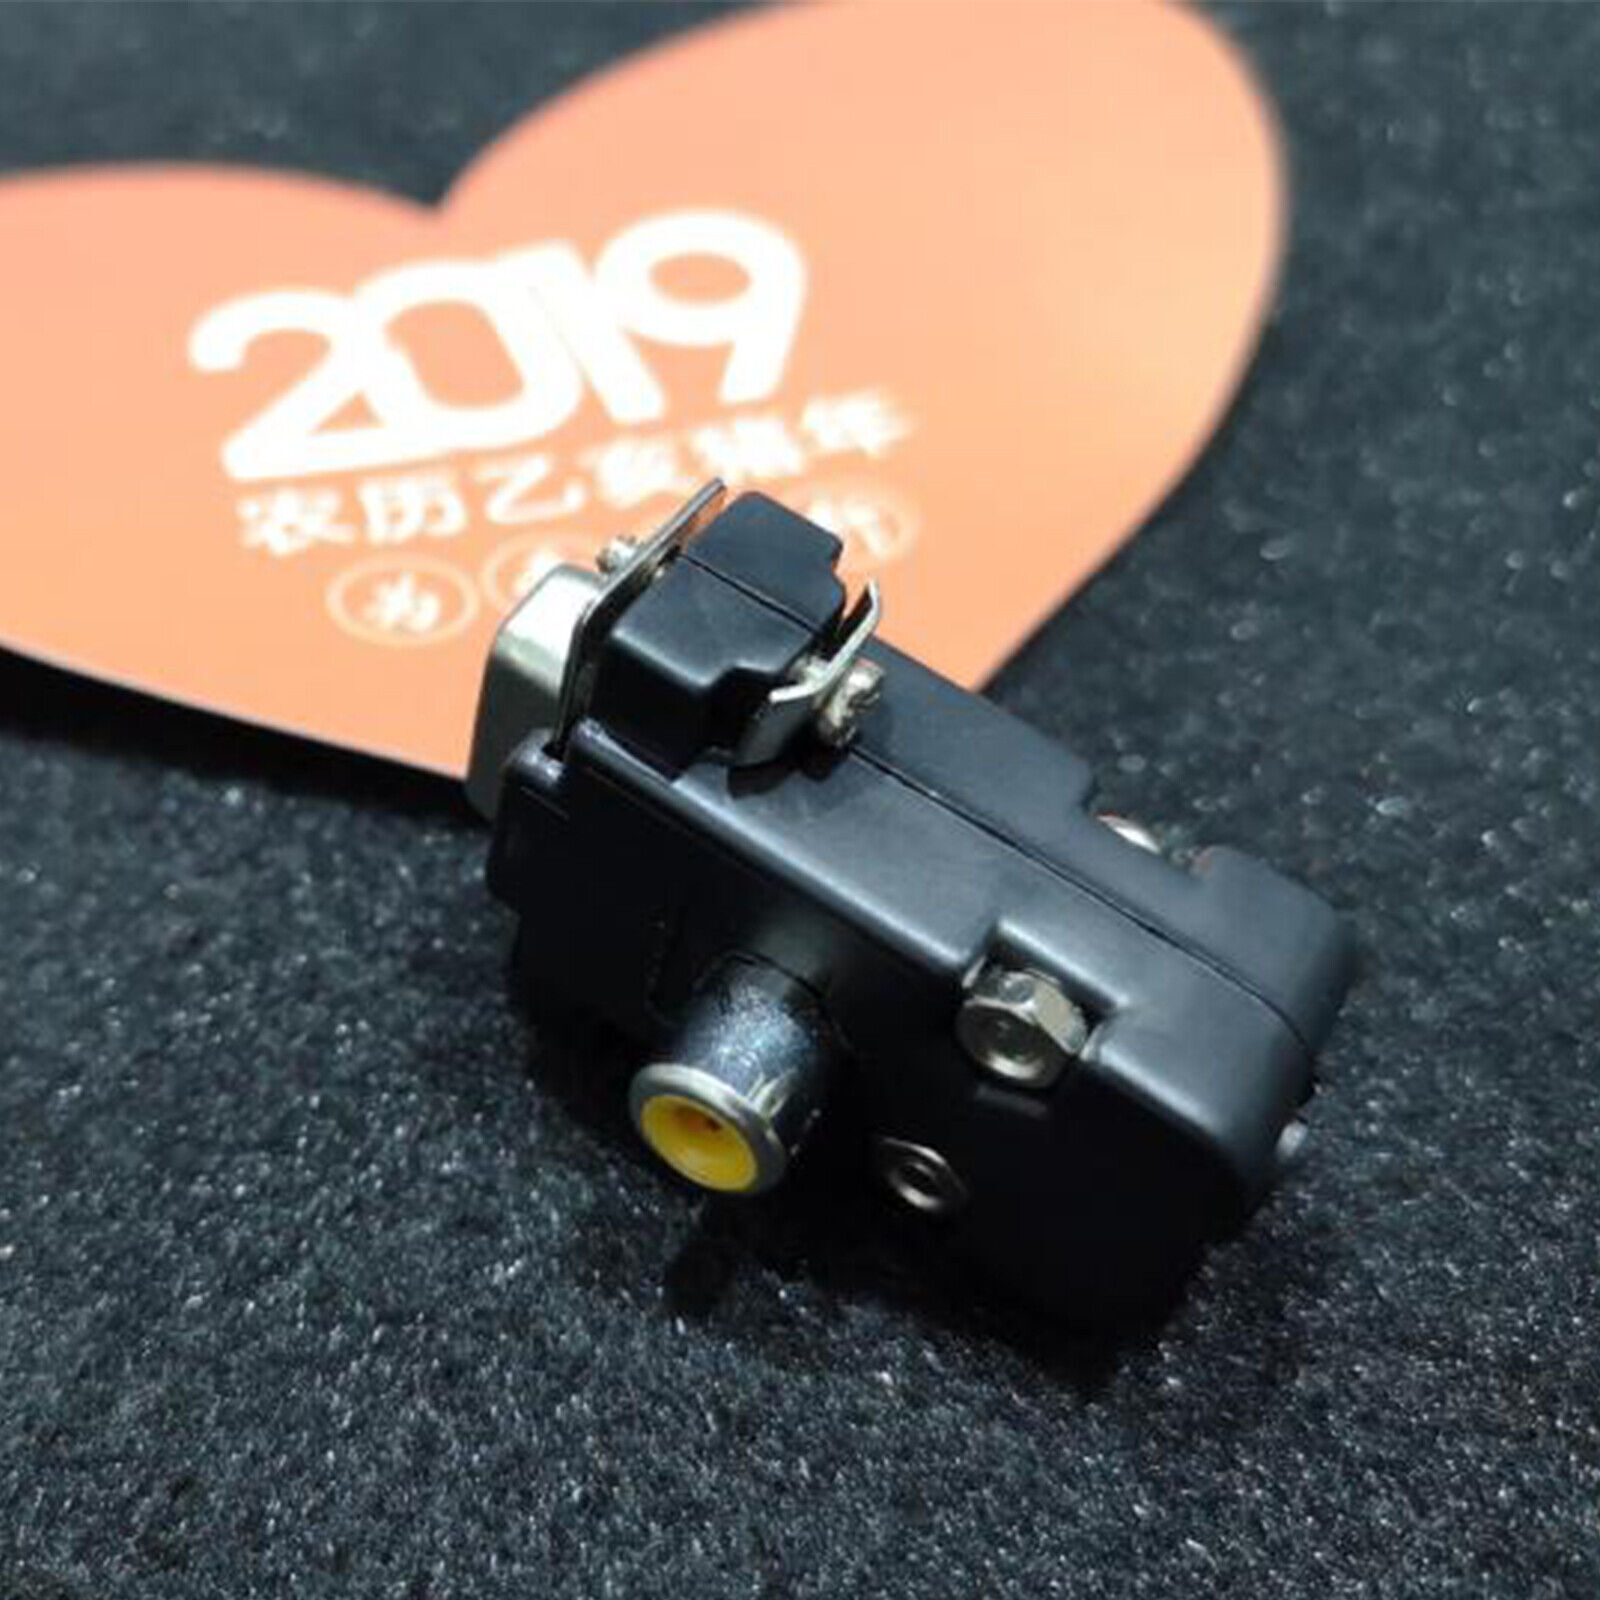 For Logitech Z-5500 Subwoofer Digital Audio Control pod Cabel Connector Adapter